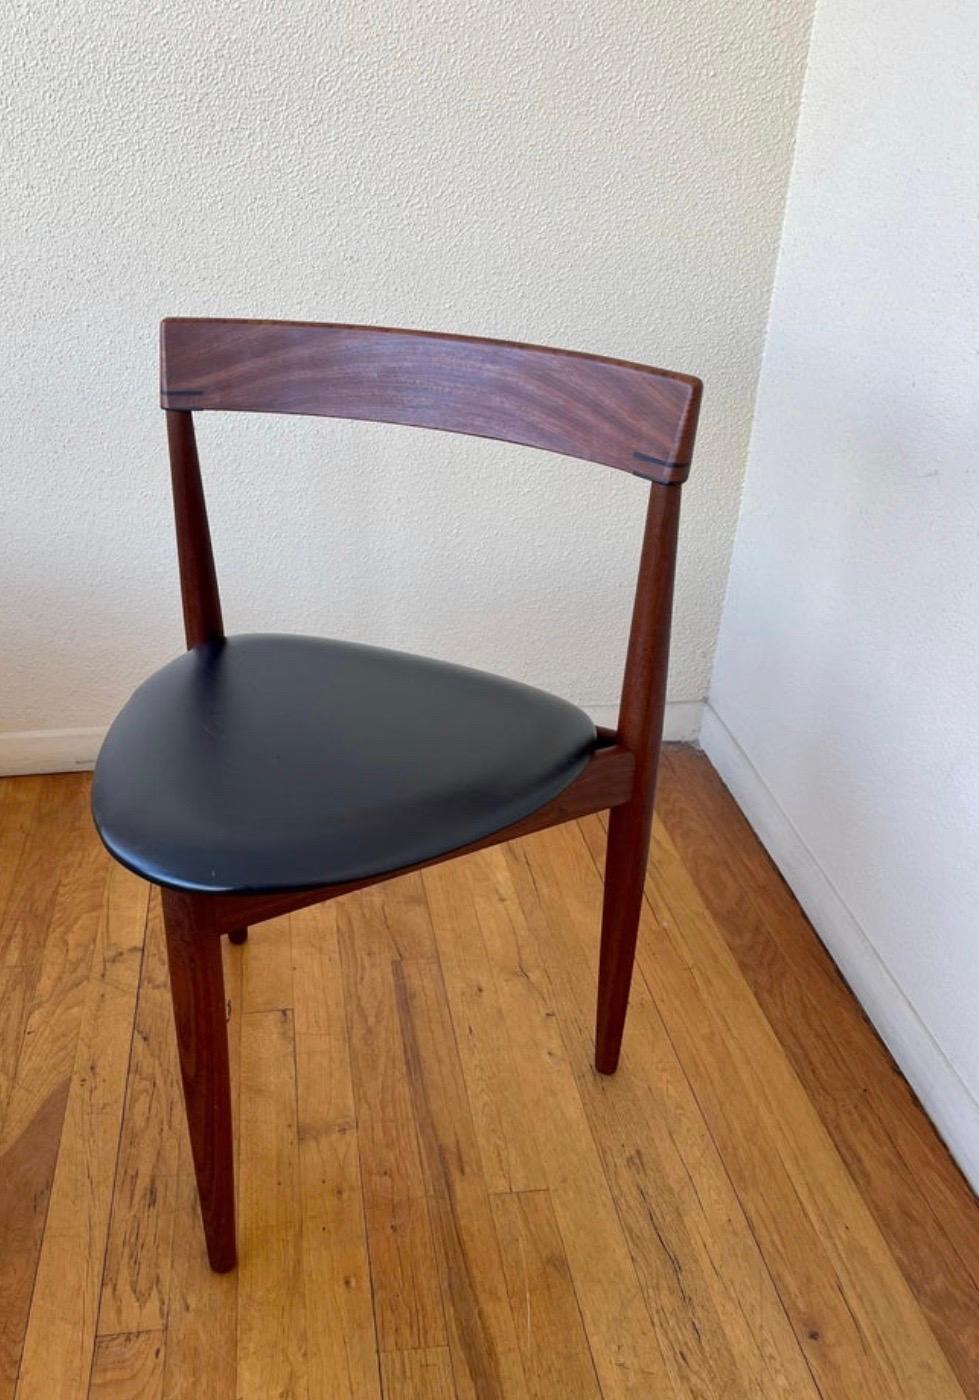 Danish modern, dining chair by Hans Olsen for Frem Rojle features contoured dark teak frames with 3 legs and Naugahyde, triangular seat.